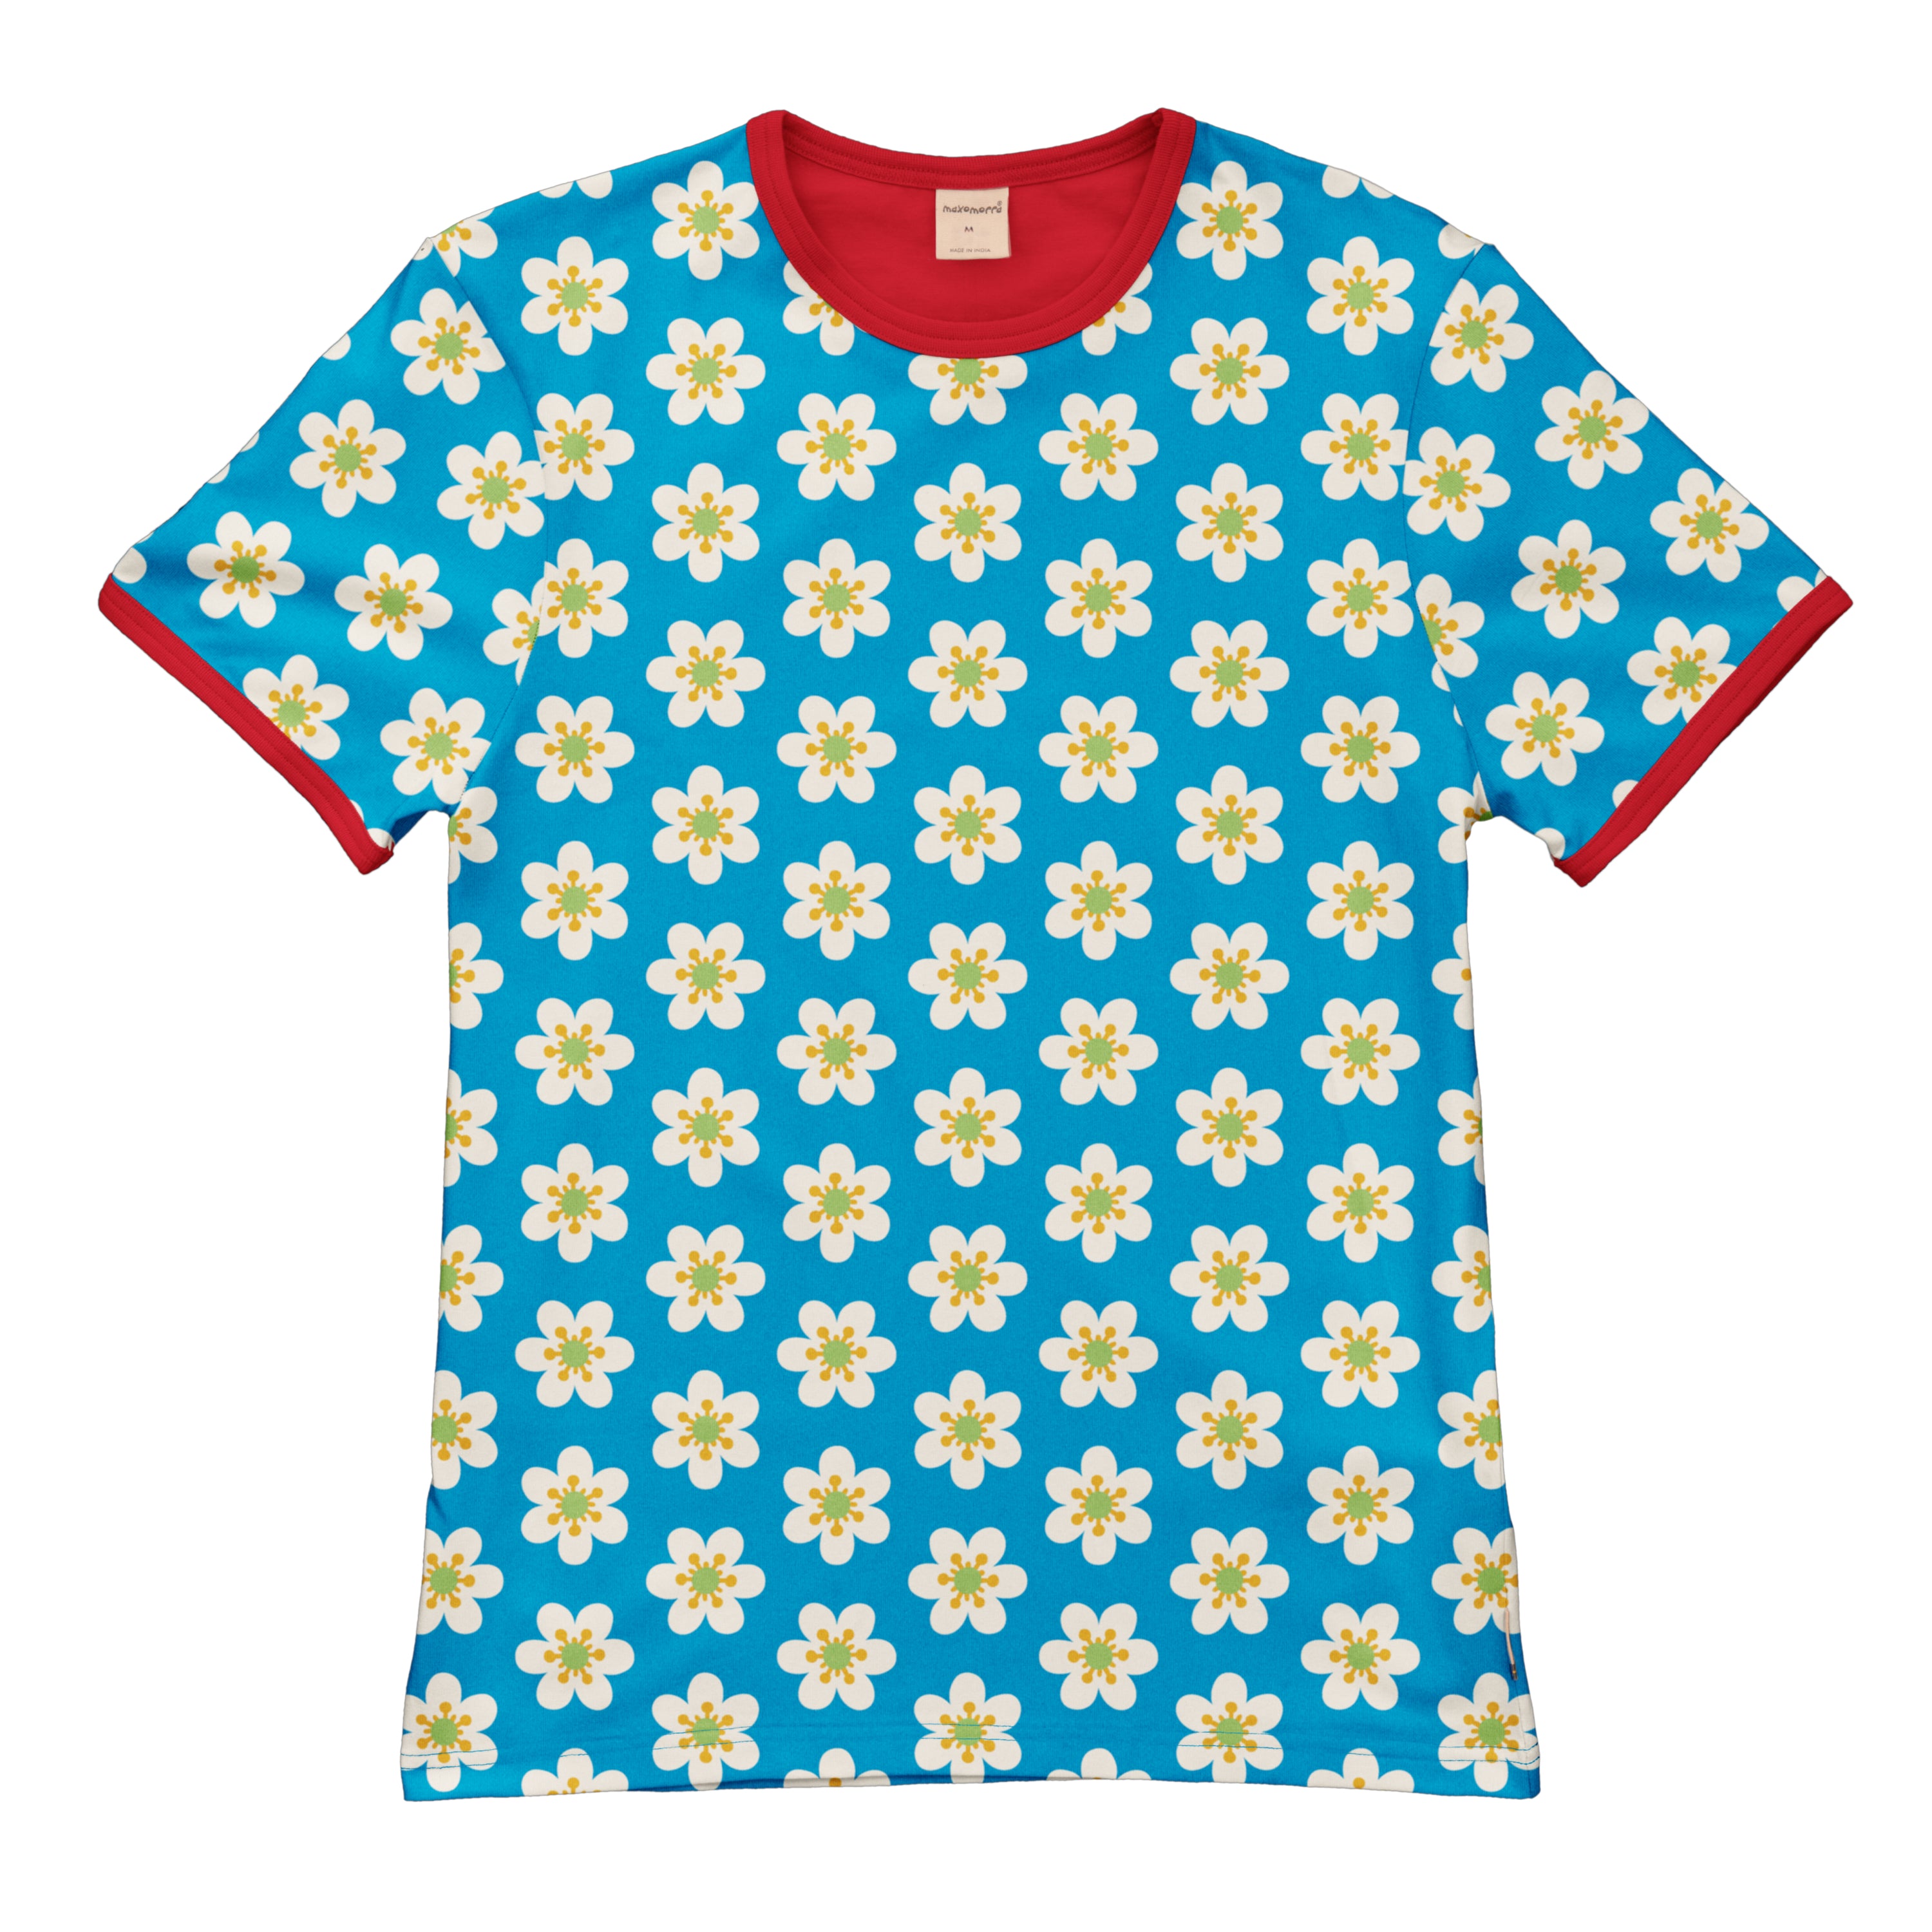 T-shirt Adult / Teen Anemone - Maxomorra